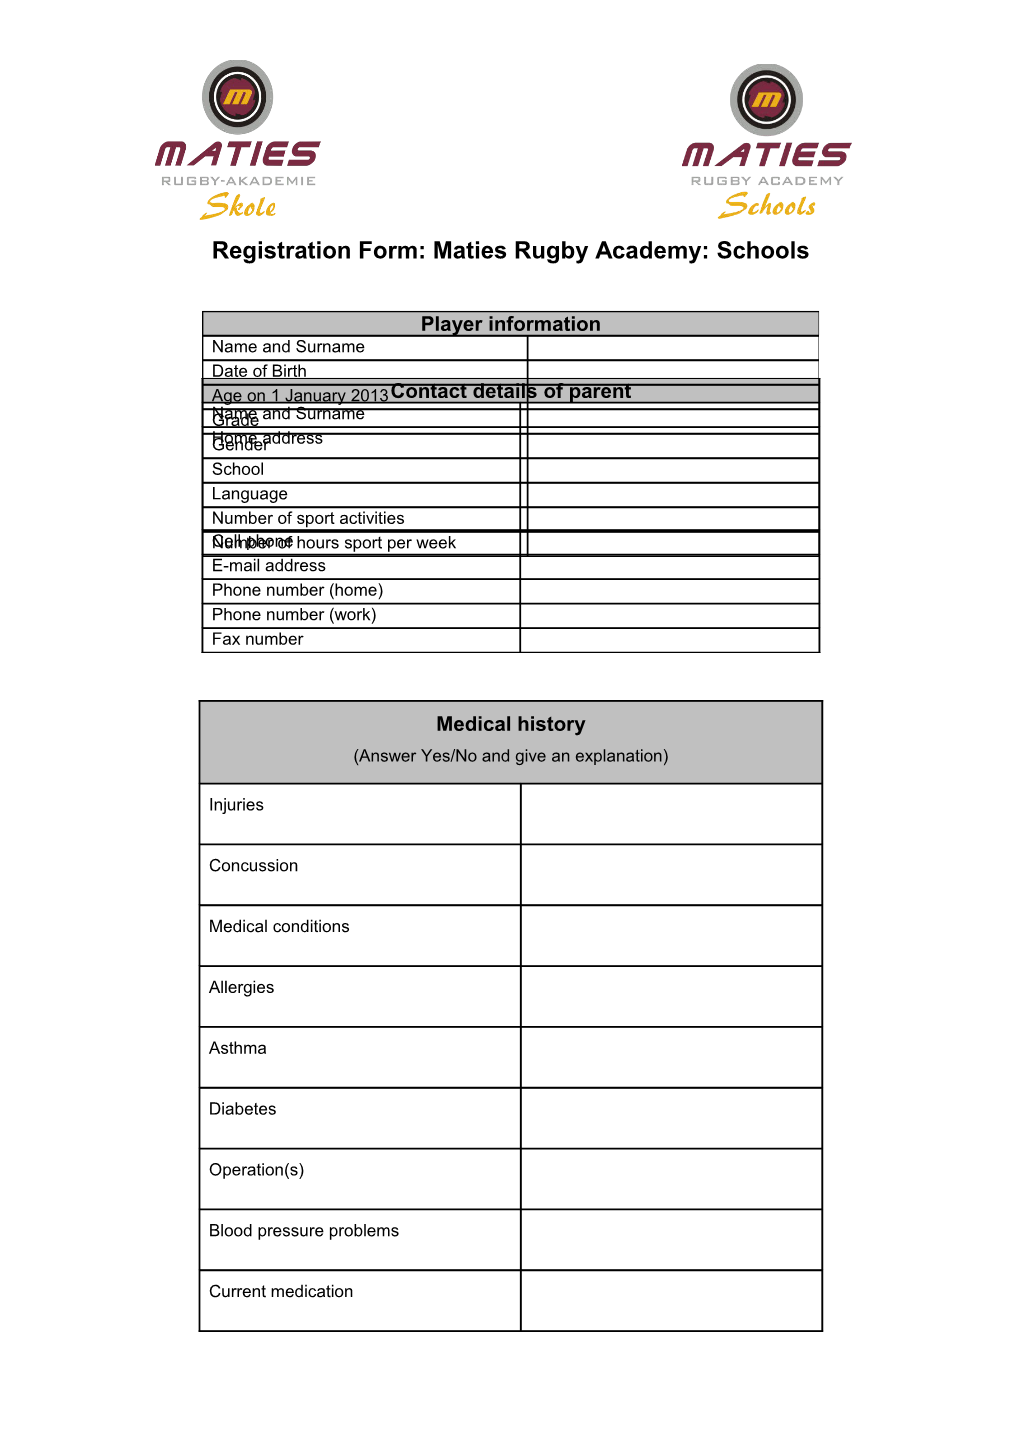 Registration Form: Matiesrugbyacademy: Schools